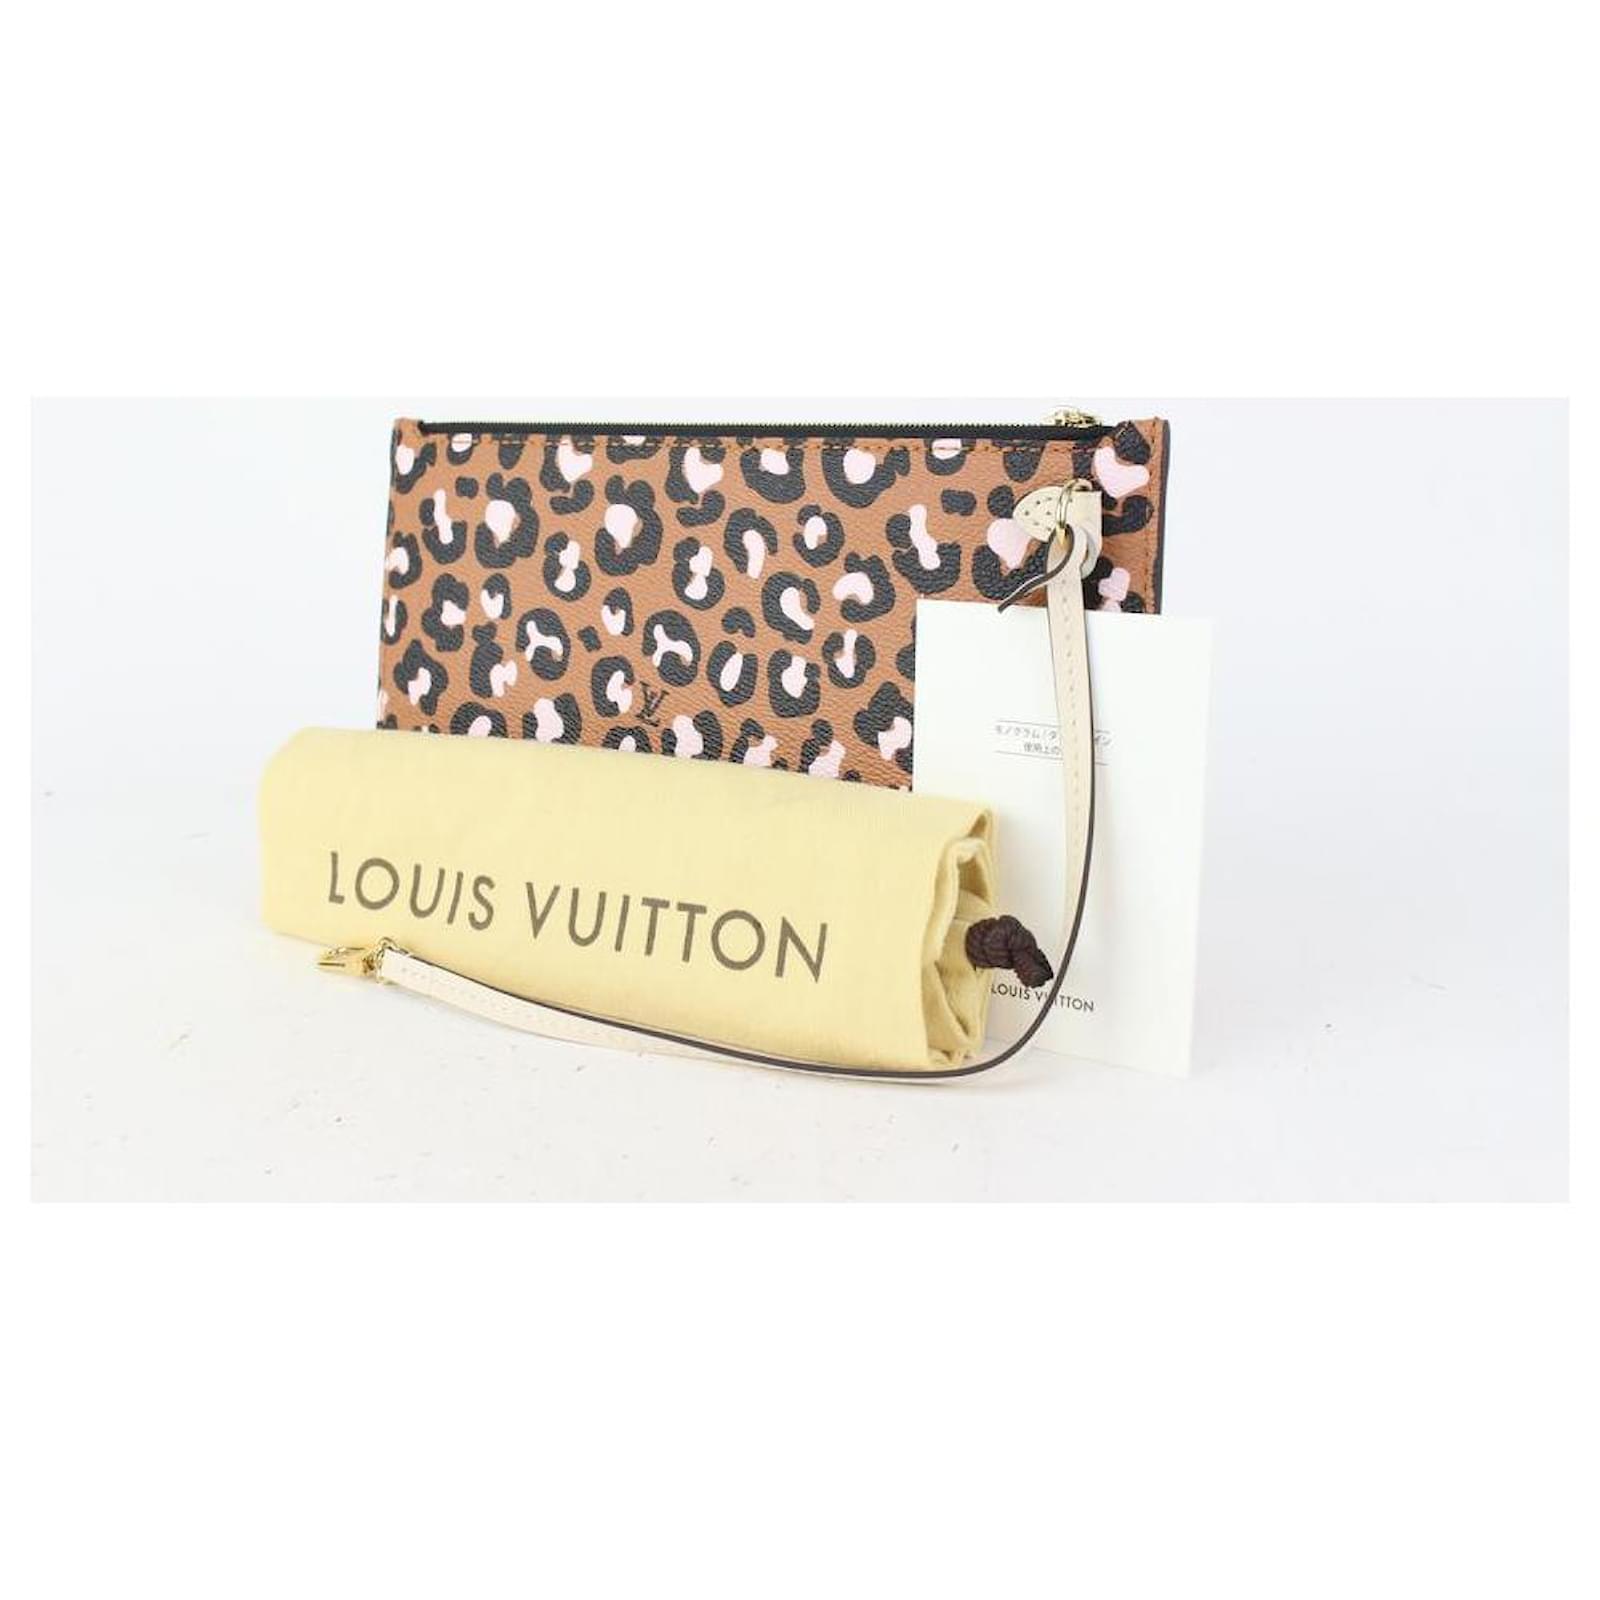 LOUIS VUITTON Neverfull MM Wild at Heart Cheetah Leopard Purse Bag